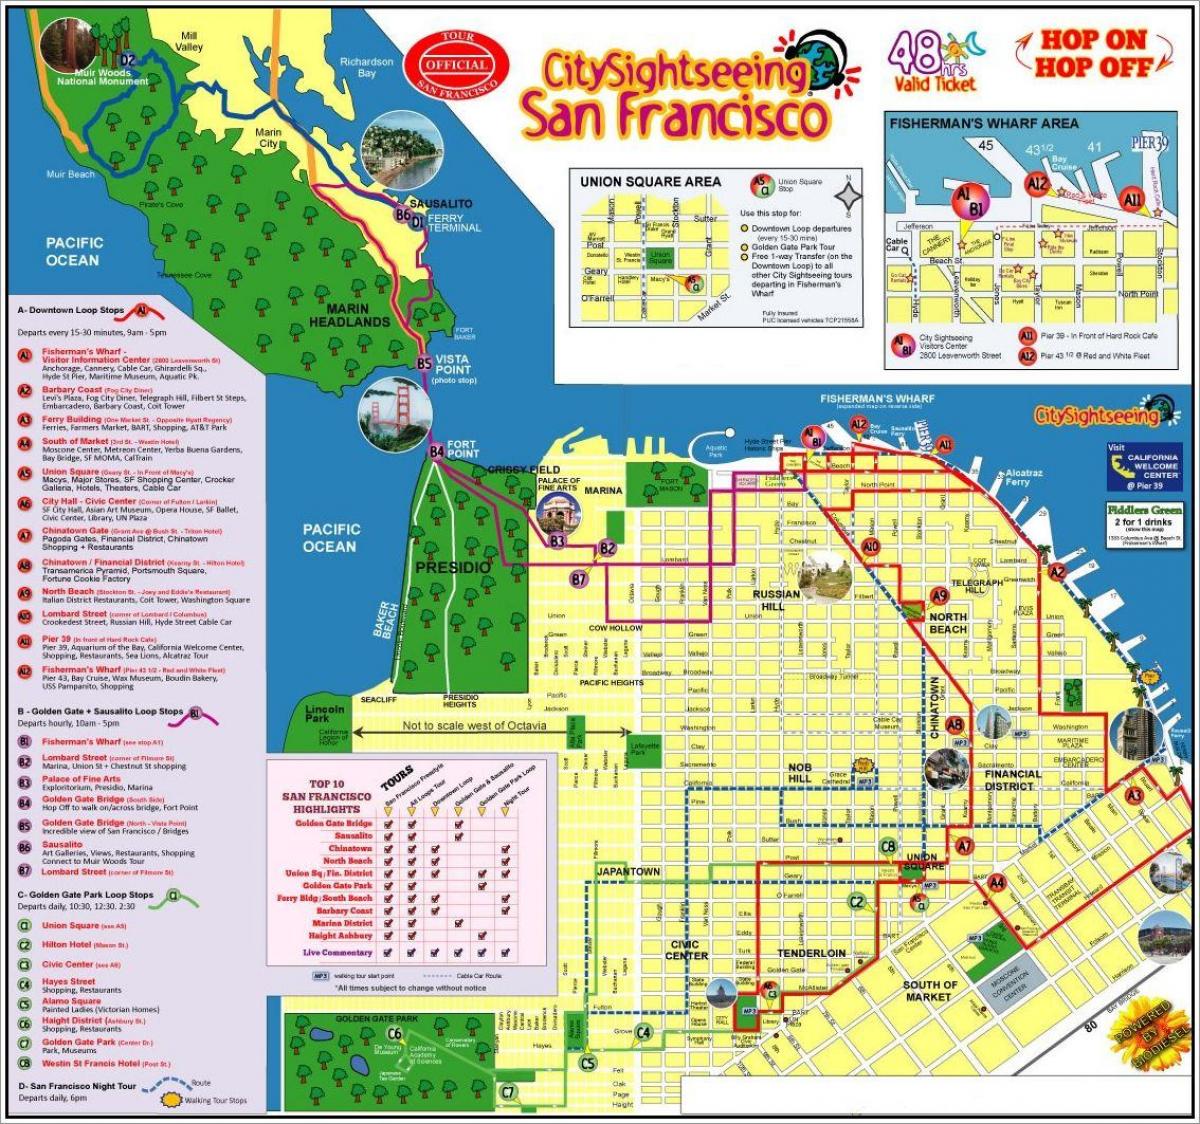 Сан Франциско-хоп-хоп-офф бус тоур мапи